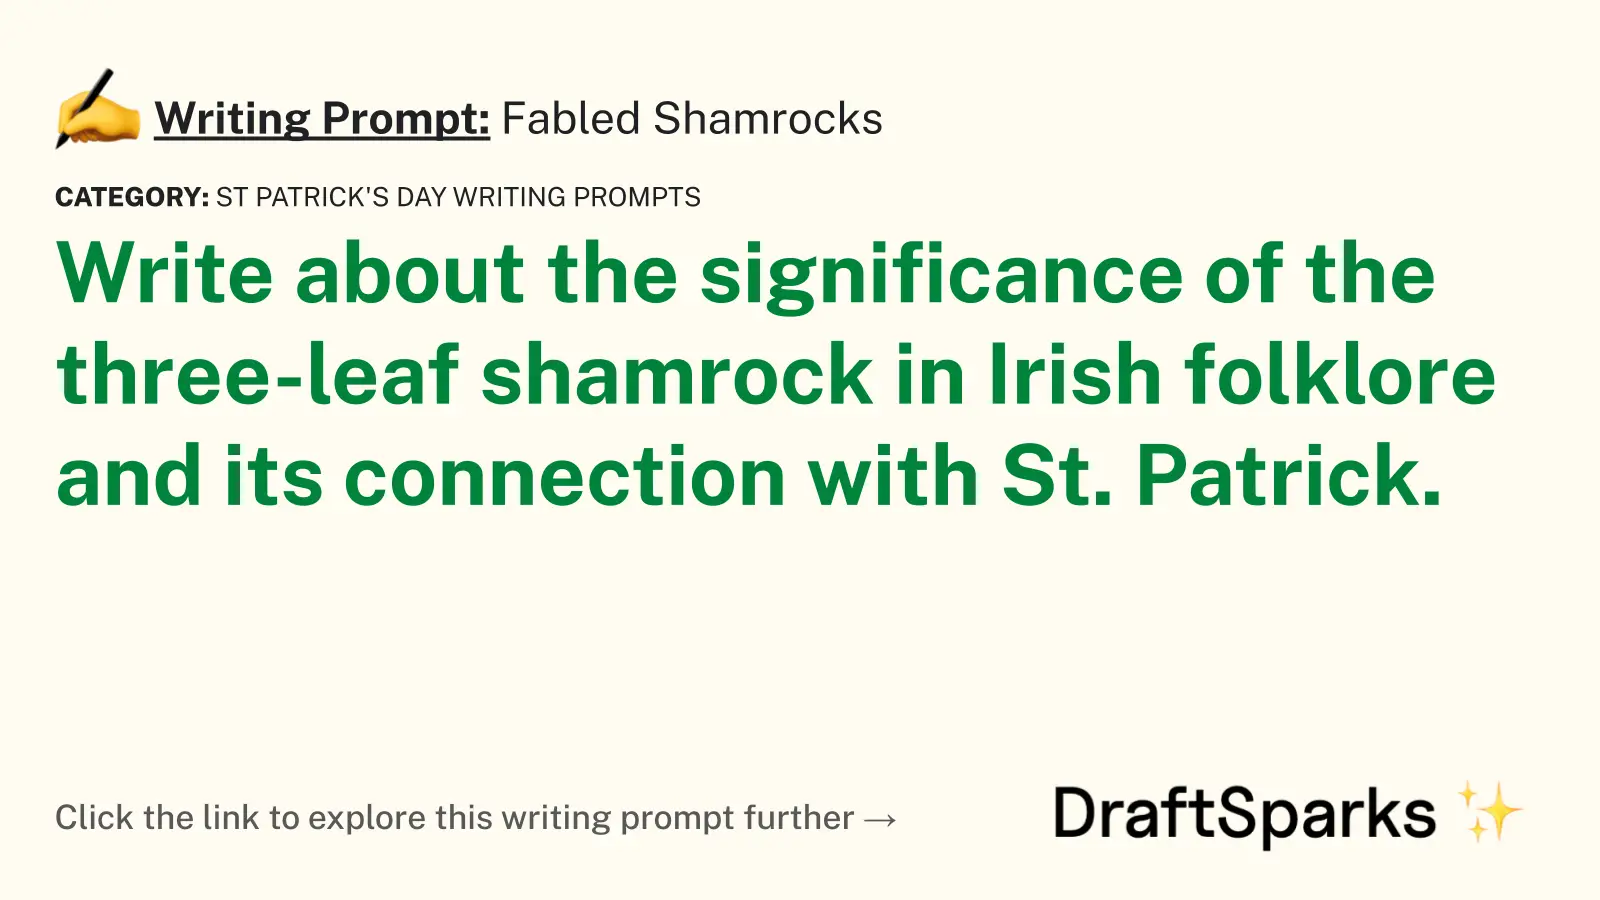 Fabled Shamrocks